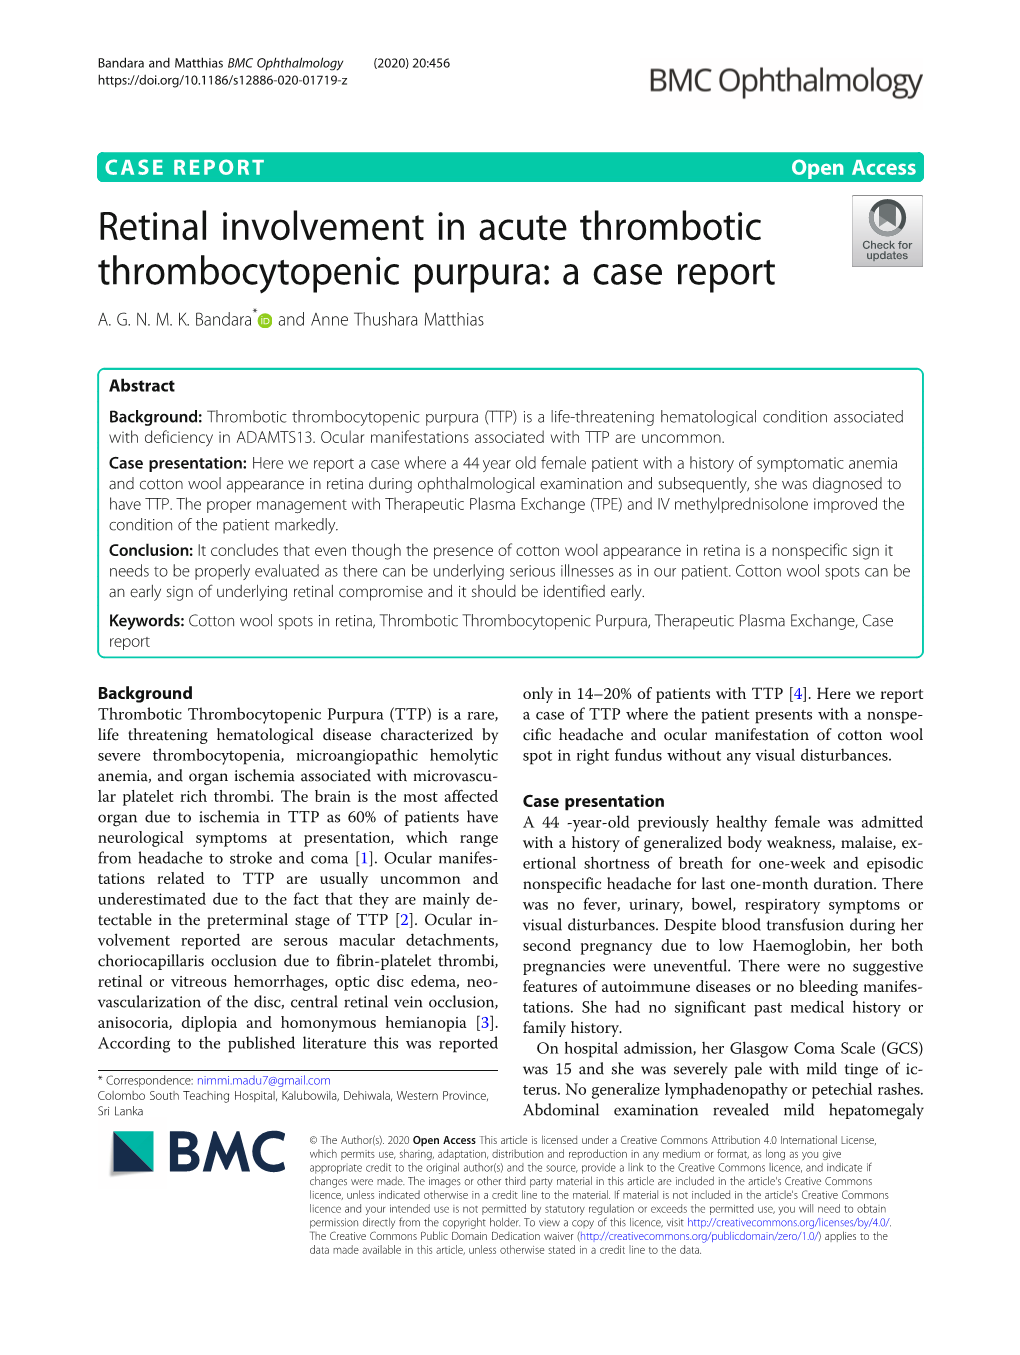 Retinal Involvement in Acute Thrombotic Thrombocytopenic Purpura: a Case Report A